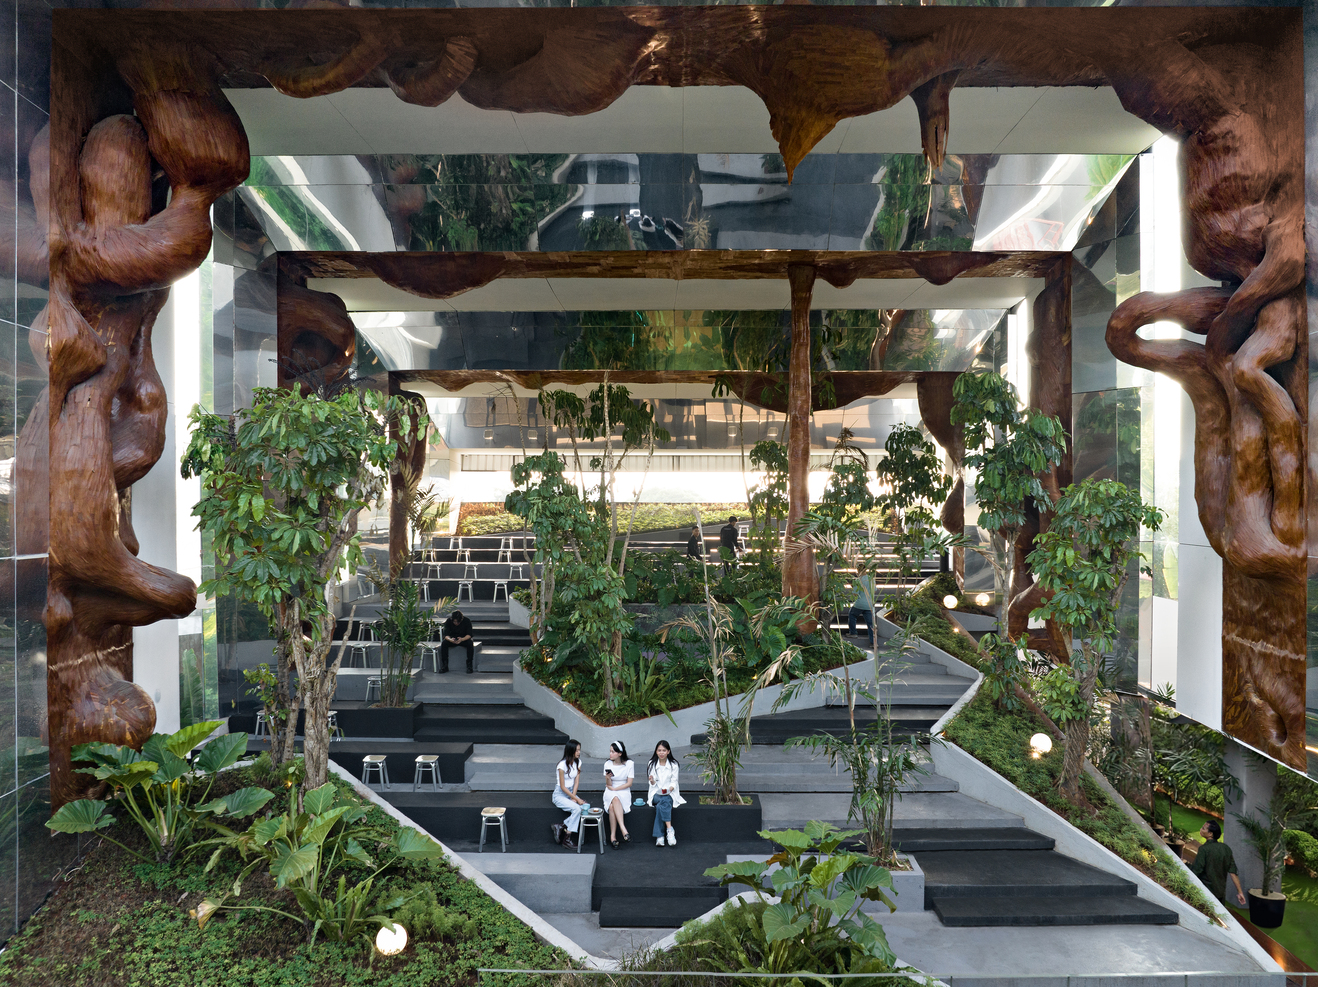 Tanatap Frame Garden 設計有階梯式座椅的半開放式室內花園。